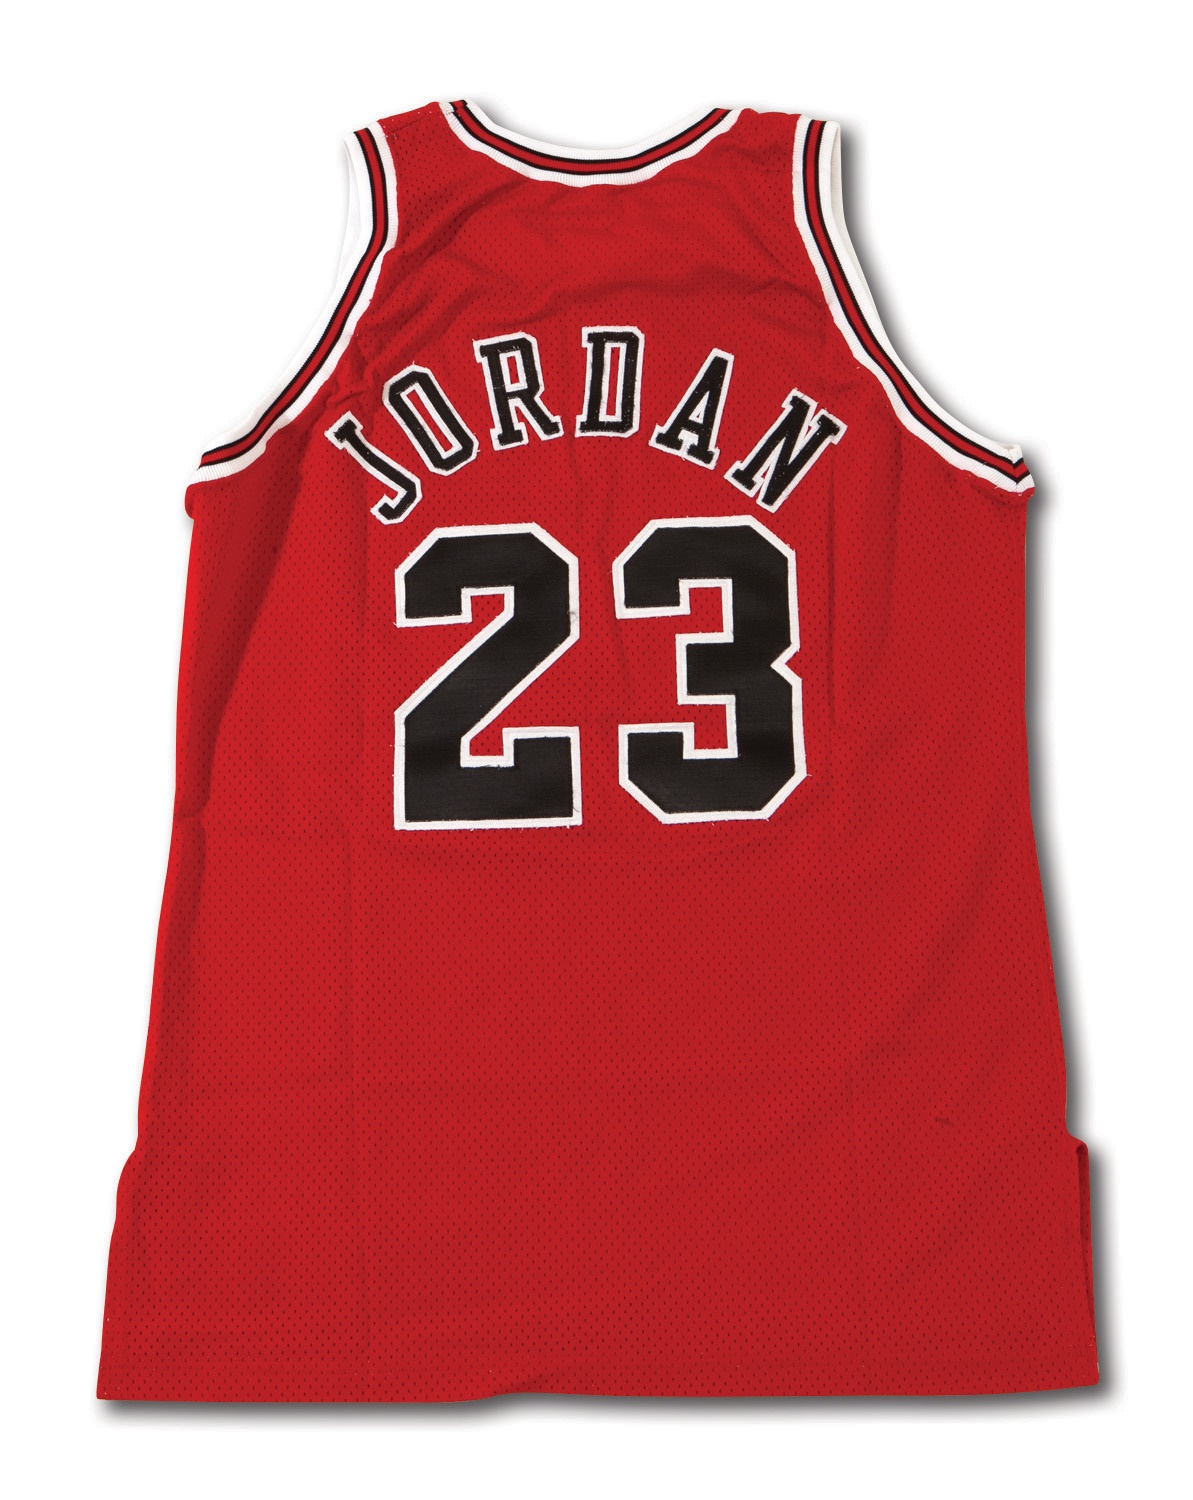 1992-93 Michael Jordan Game Worn Jersey. Another Championship